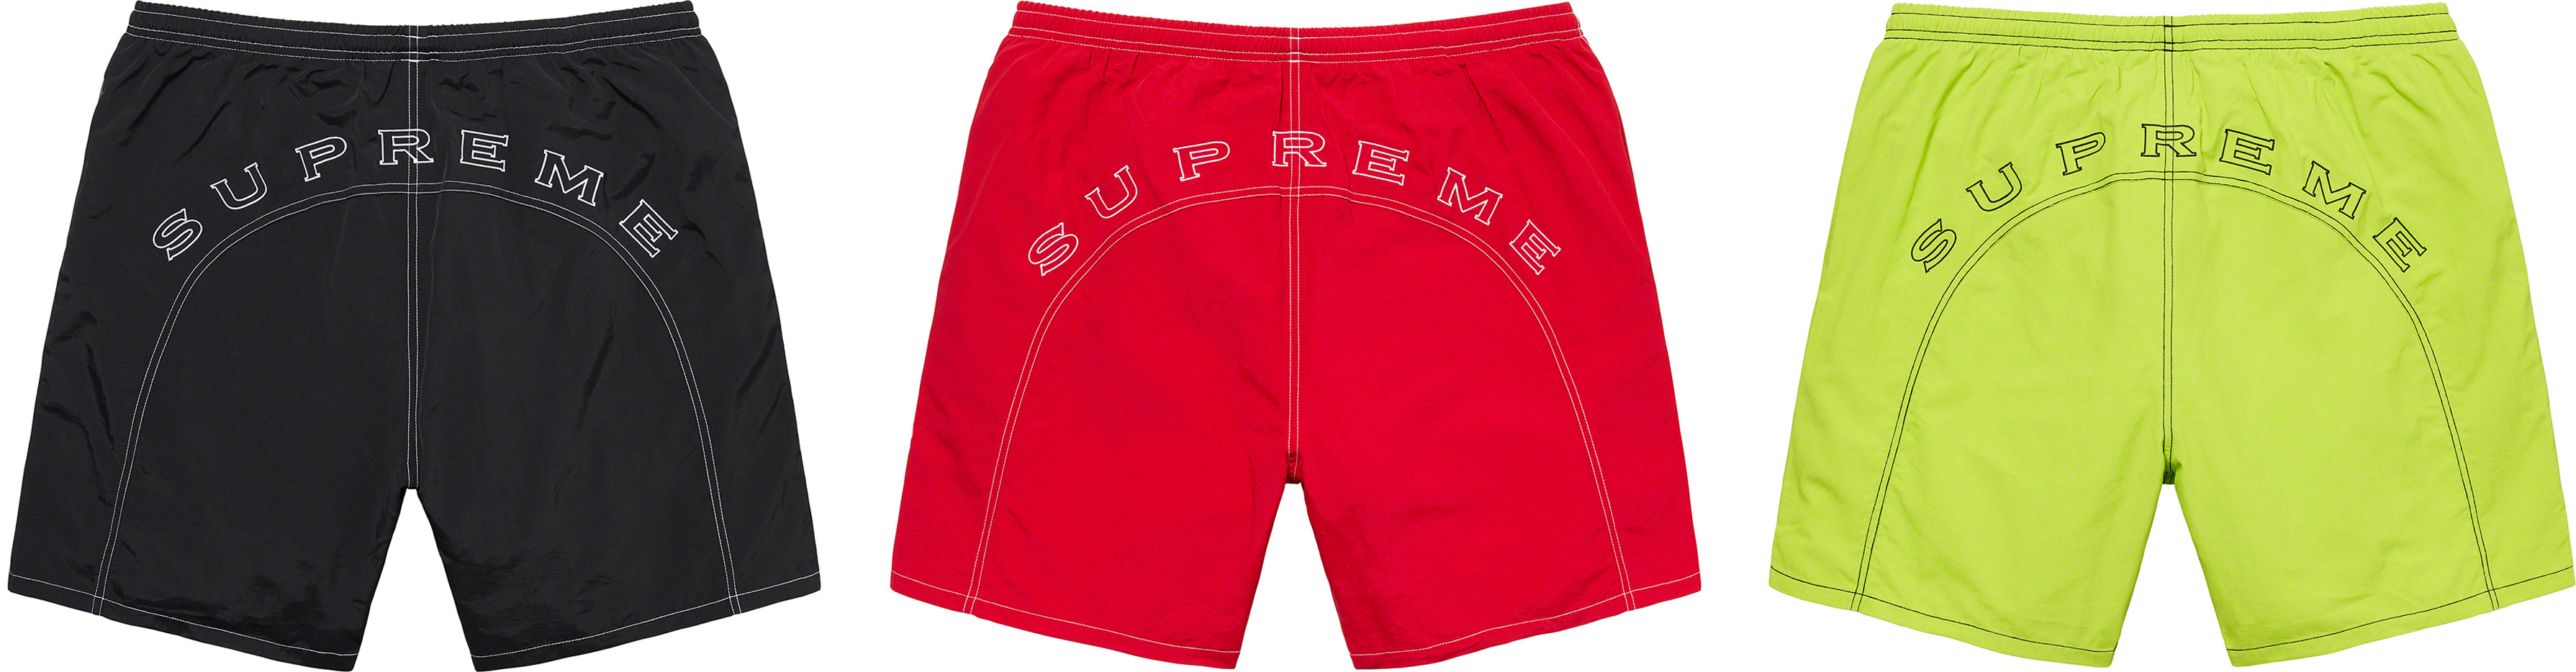 Supreme Arc Logo Water Short  sizeSRoyalSIZE